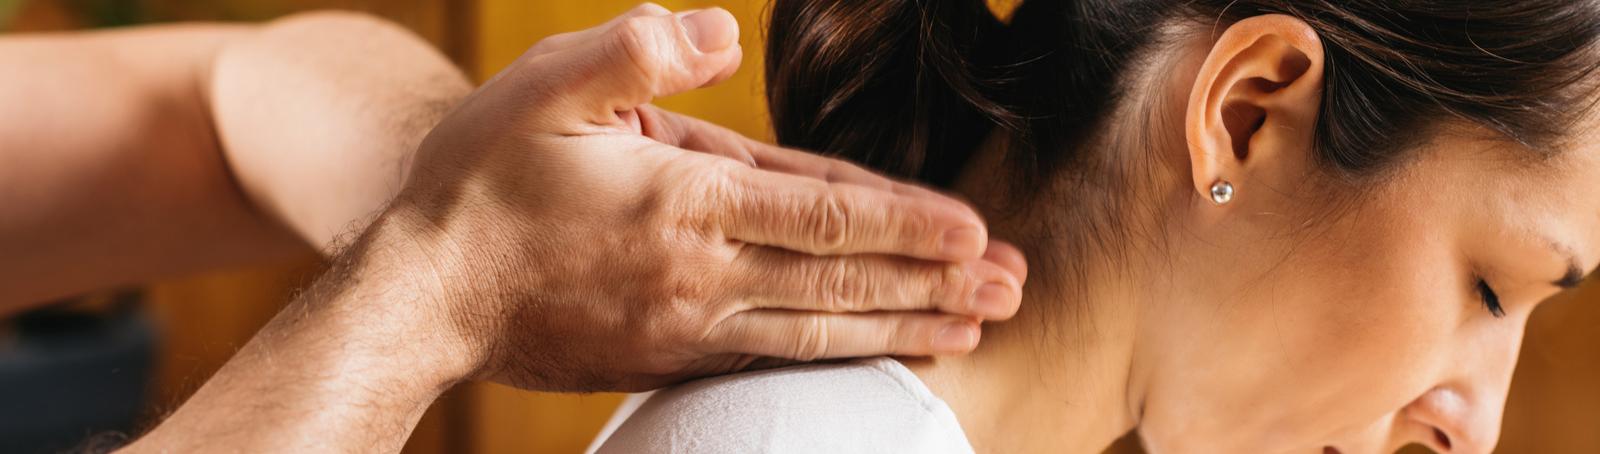 The Healing Power of Thai Massage: Case Studies and Testimonials